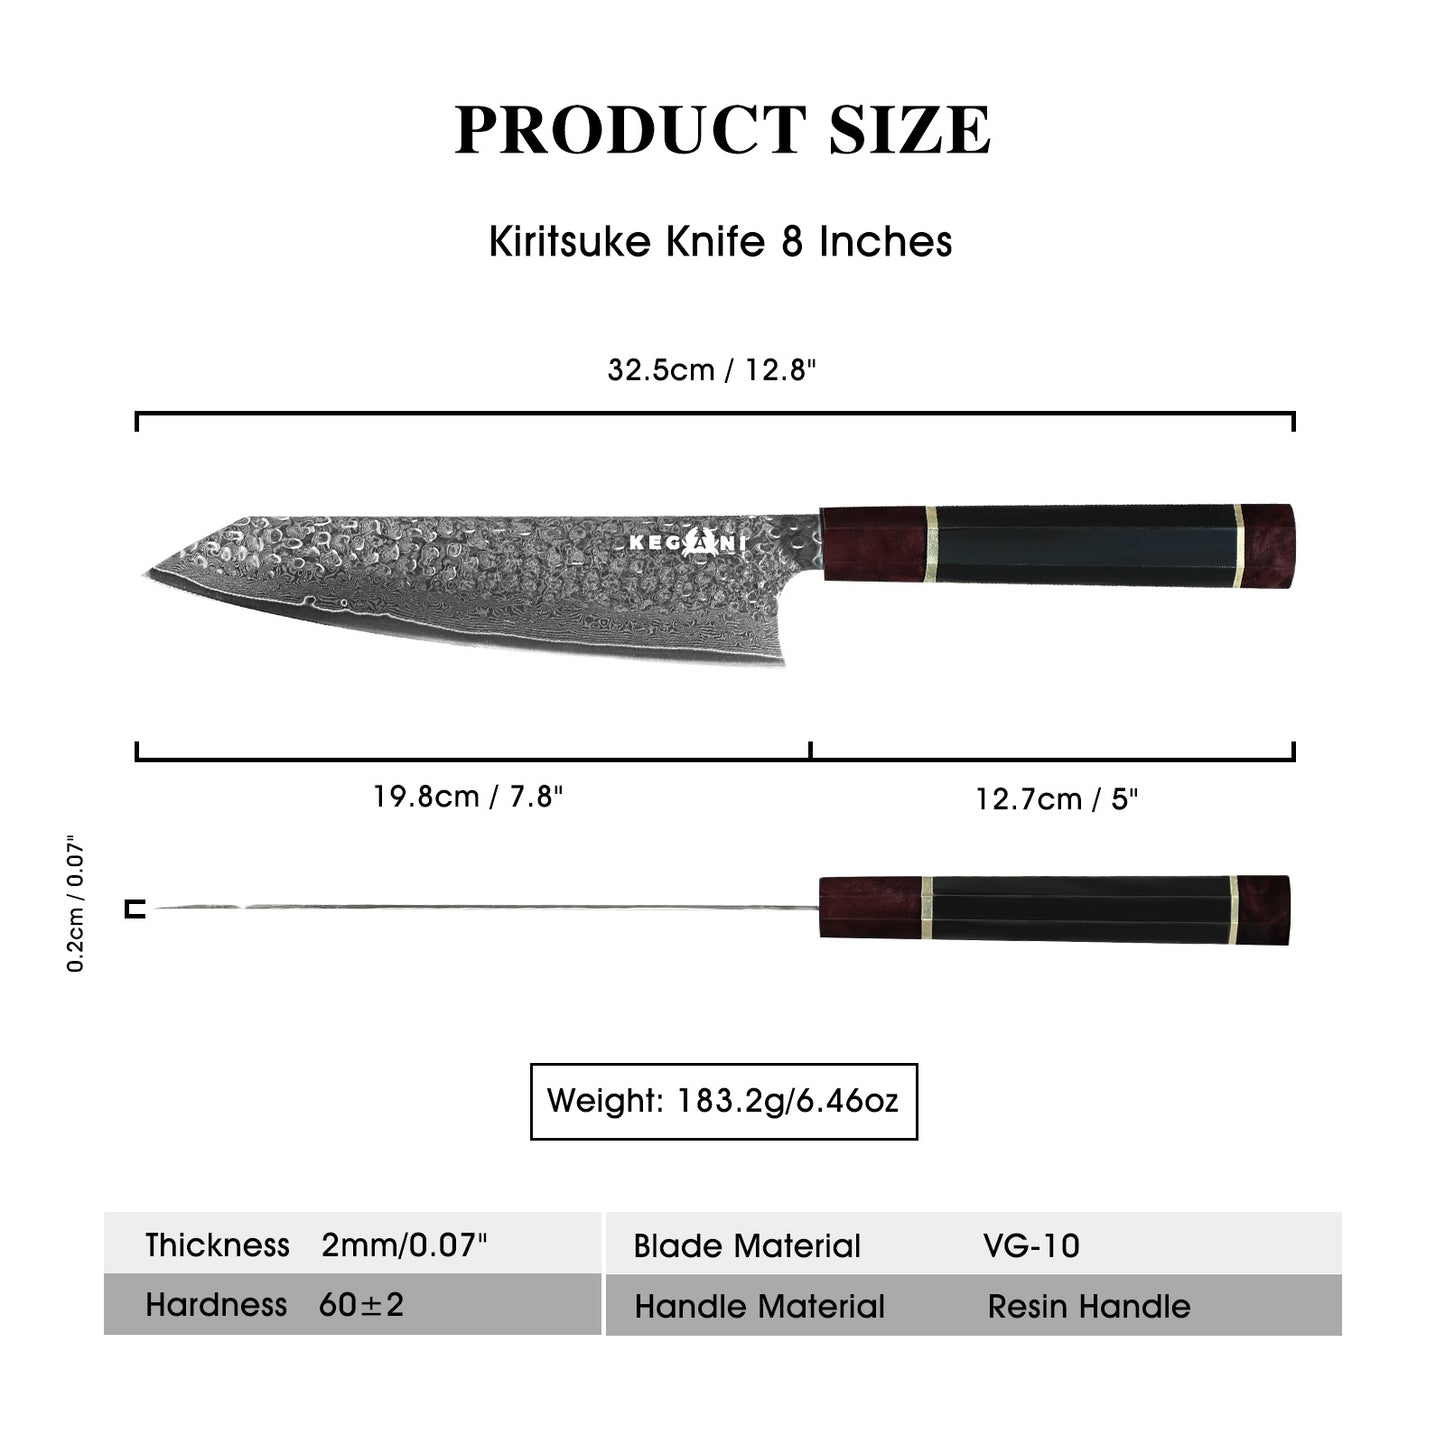 Kegani Kiritsuke Knife - 8 Inch Professional Japanese Chef's Knife 67 Layers Japanese VG-10 Damascus Steel Ultra-Sharp Kitchen Knives Gyuto Knife - Ergonomic Handle, Gift Box